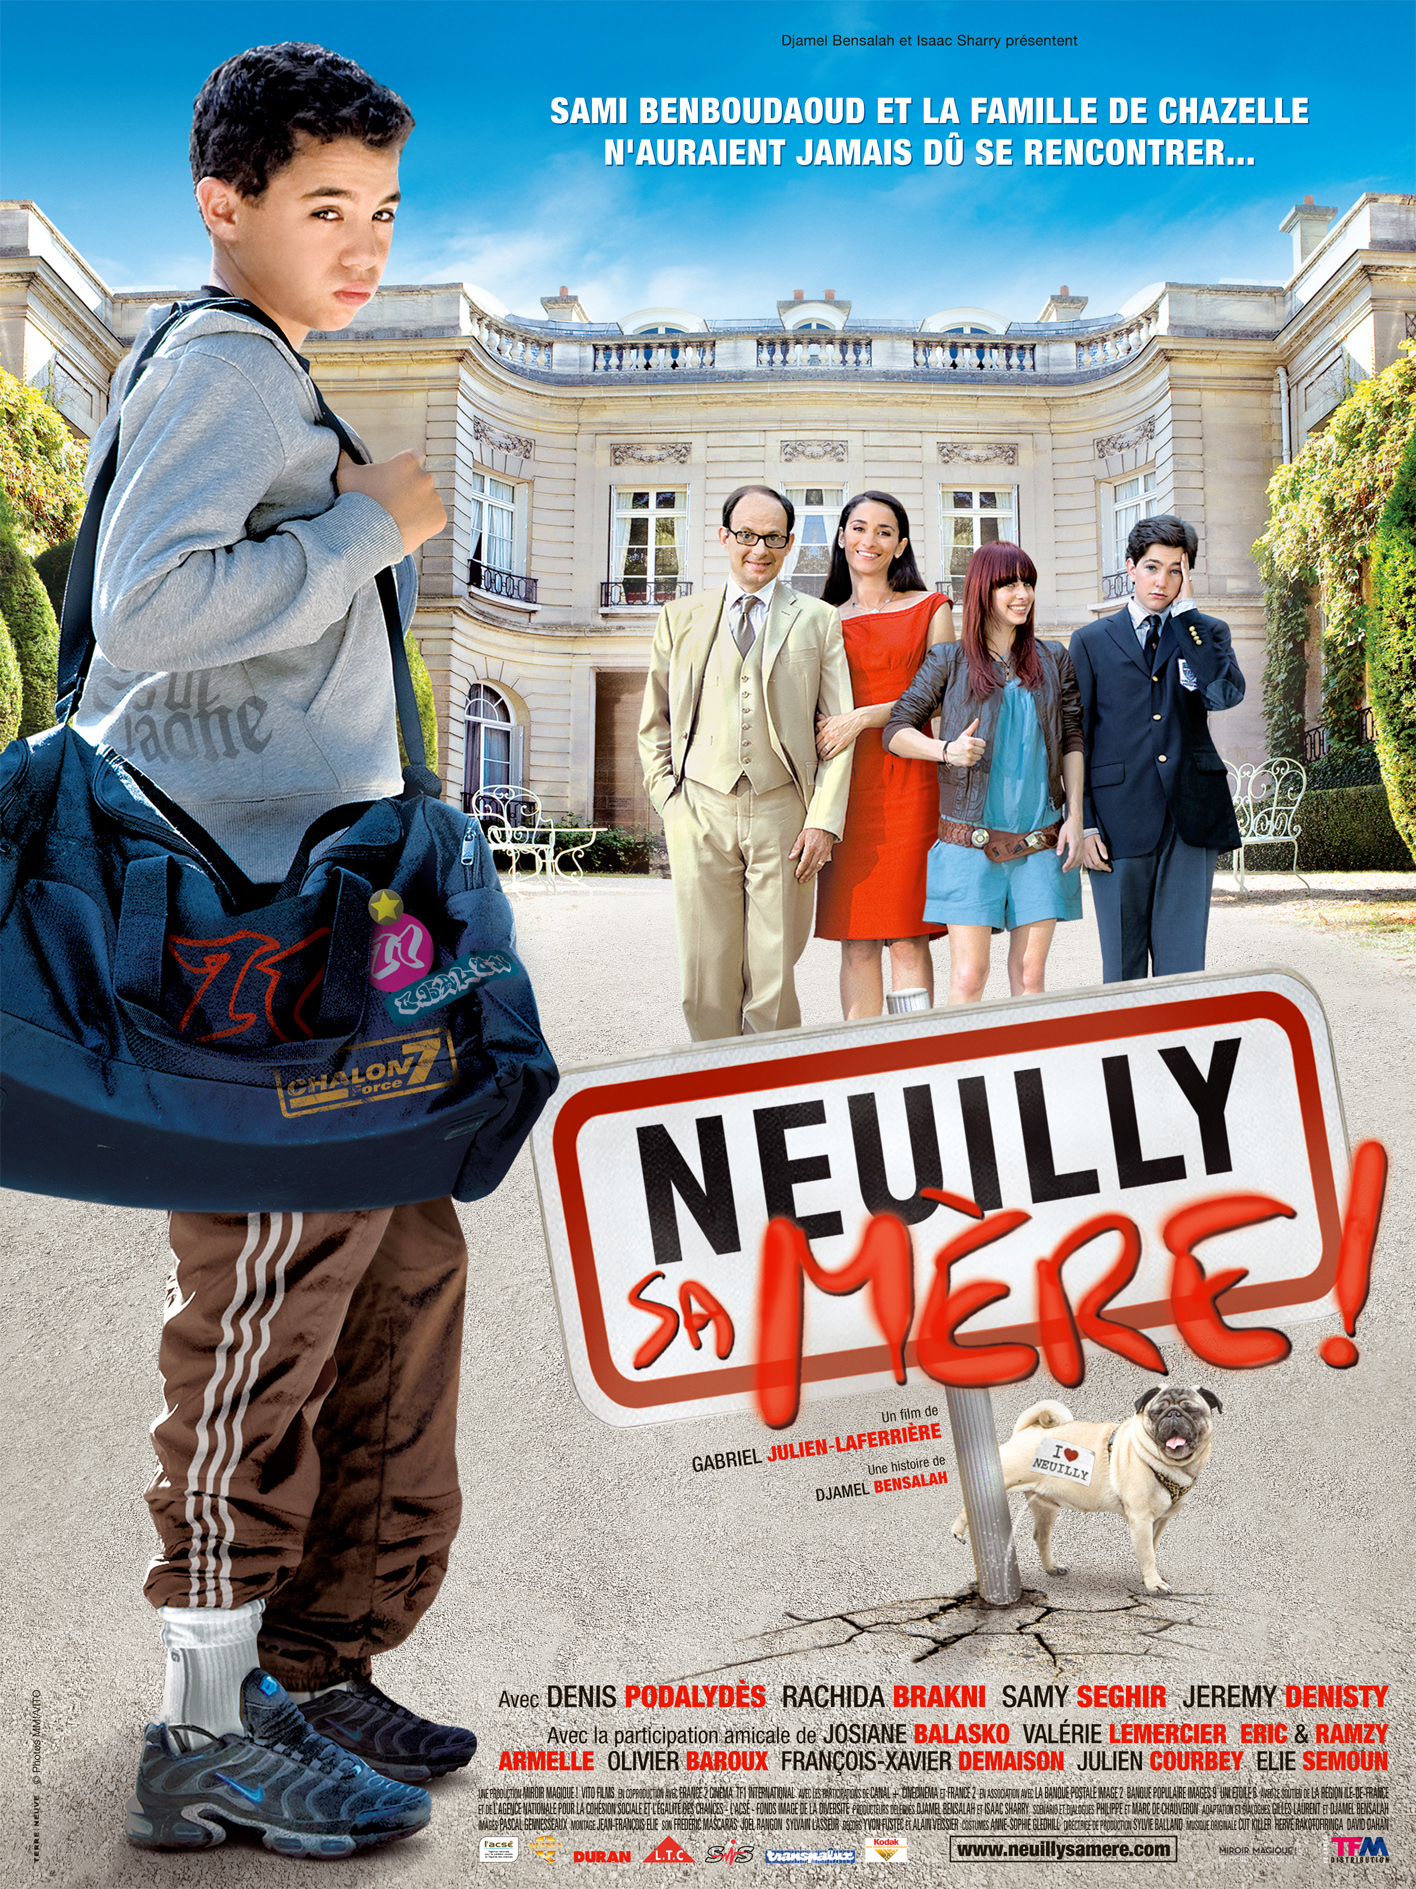 Film - Neuilly sa mère - Distributions JMH - Film Neuilly Sa Mère Streaming Vf